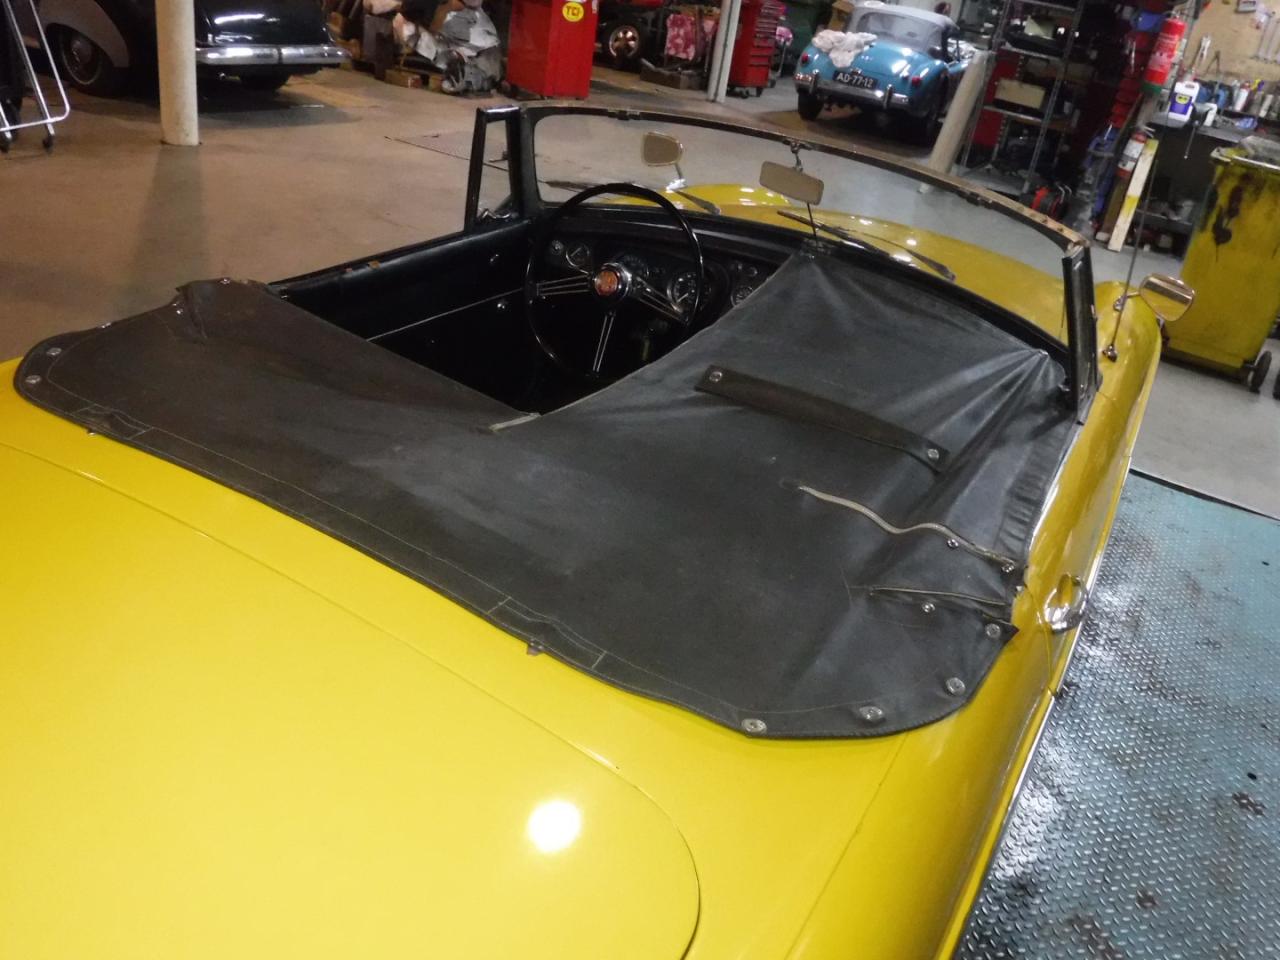 1967 MG B cabrio yellow